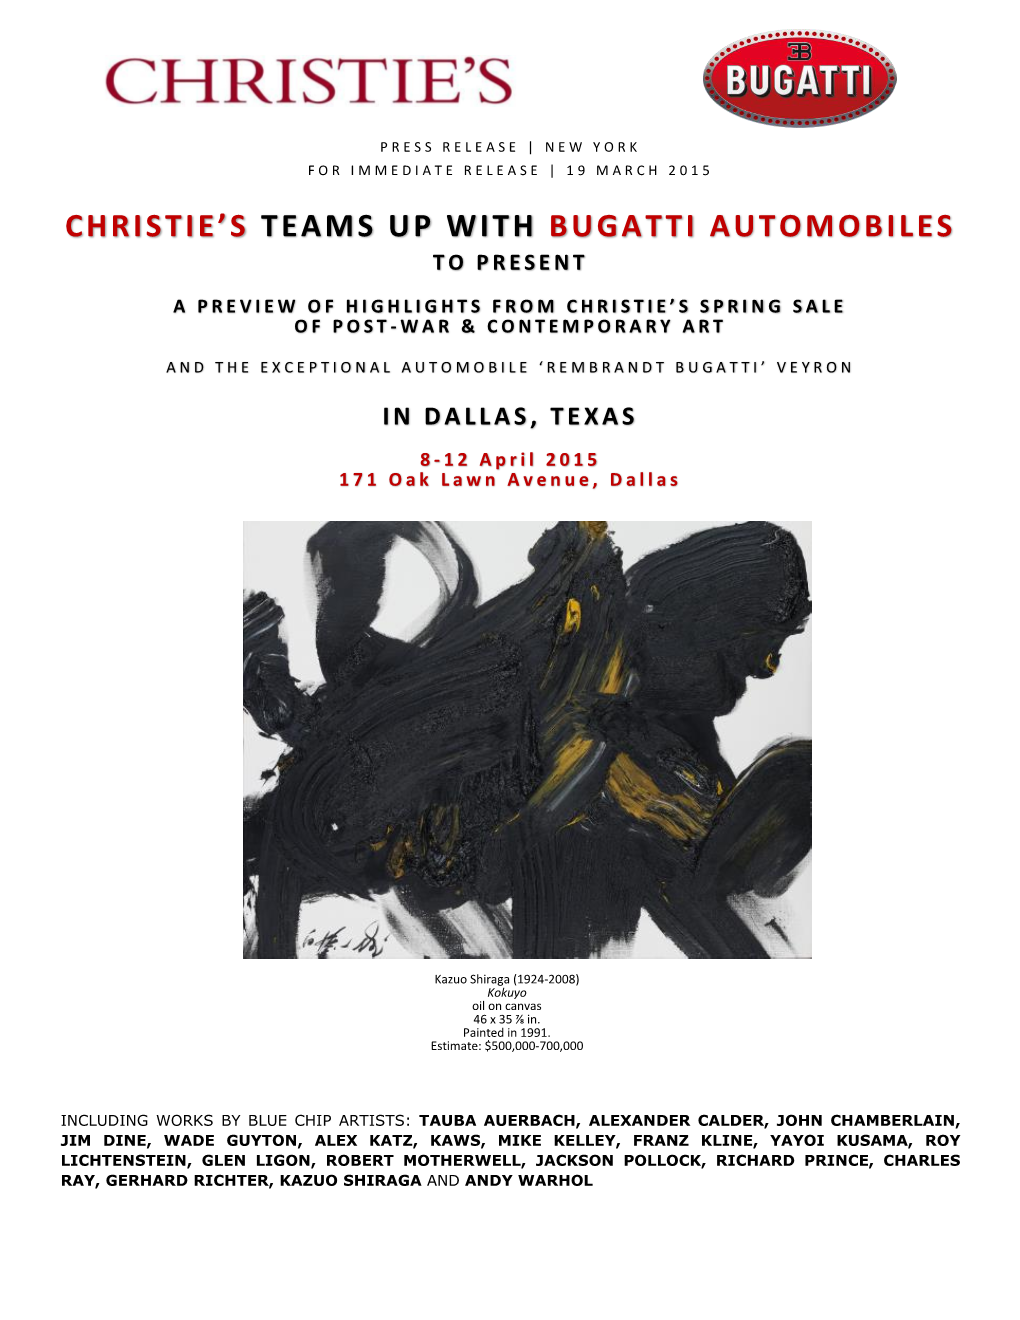 Christie's Teams up with Bugatti Automobiles